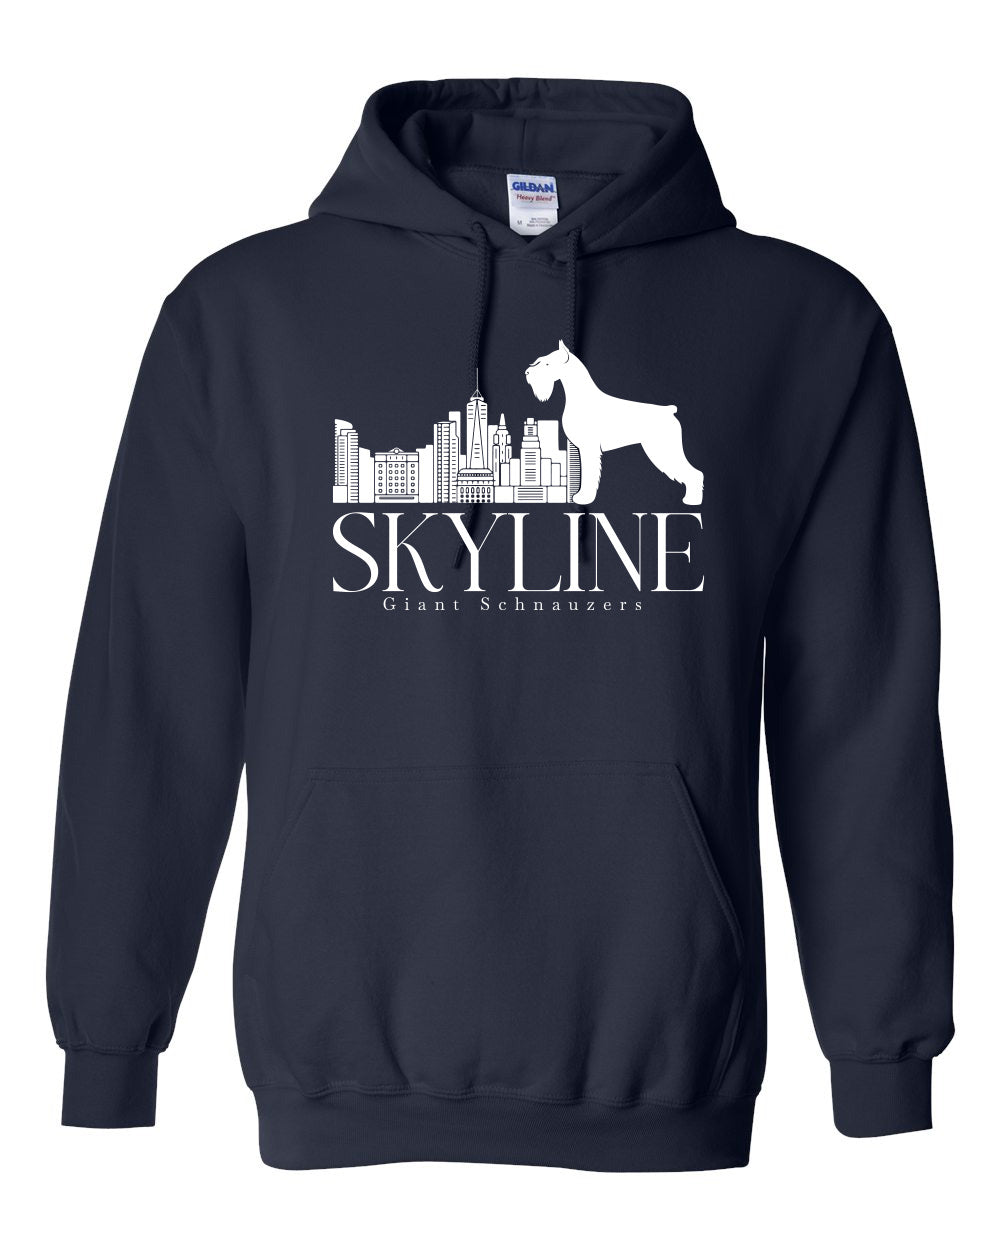 Skyline Giant Schnauzers Navy Heavy Blend Hooded Sweatshirt - 18500